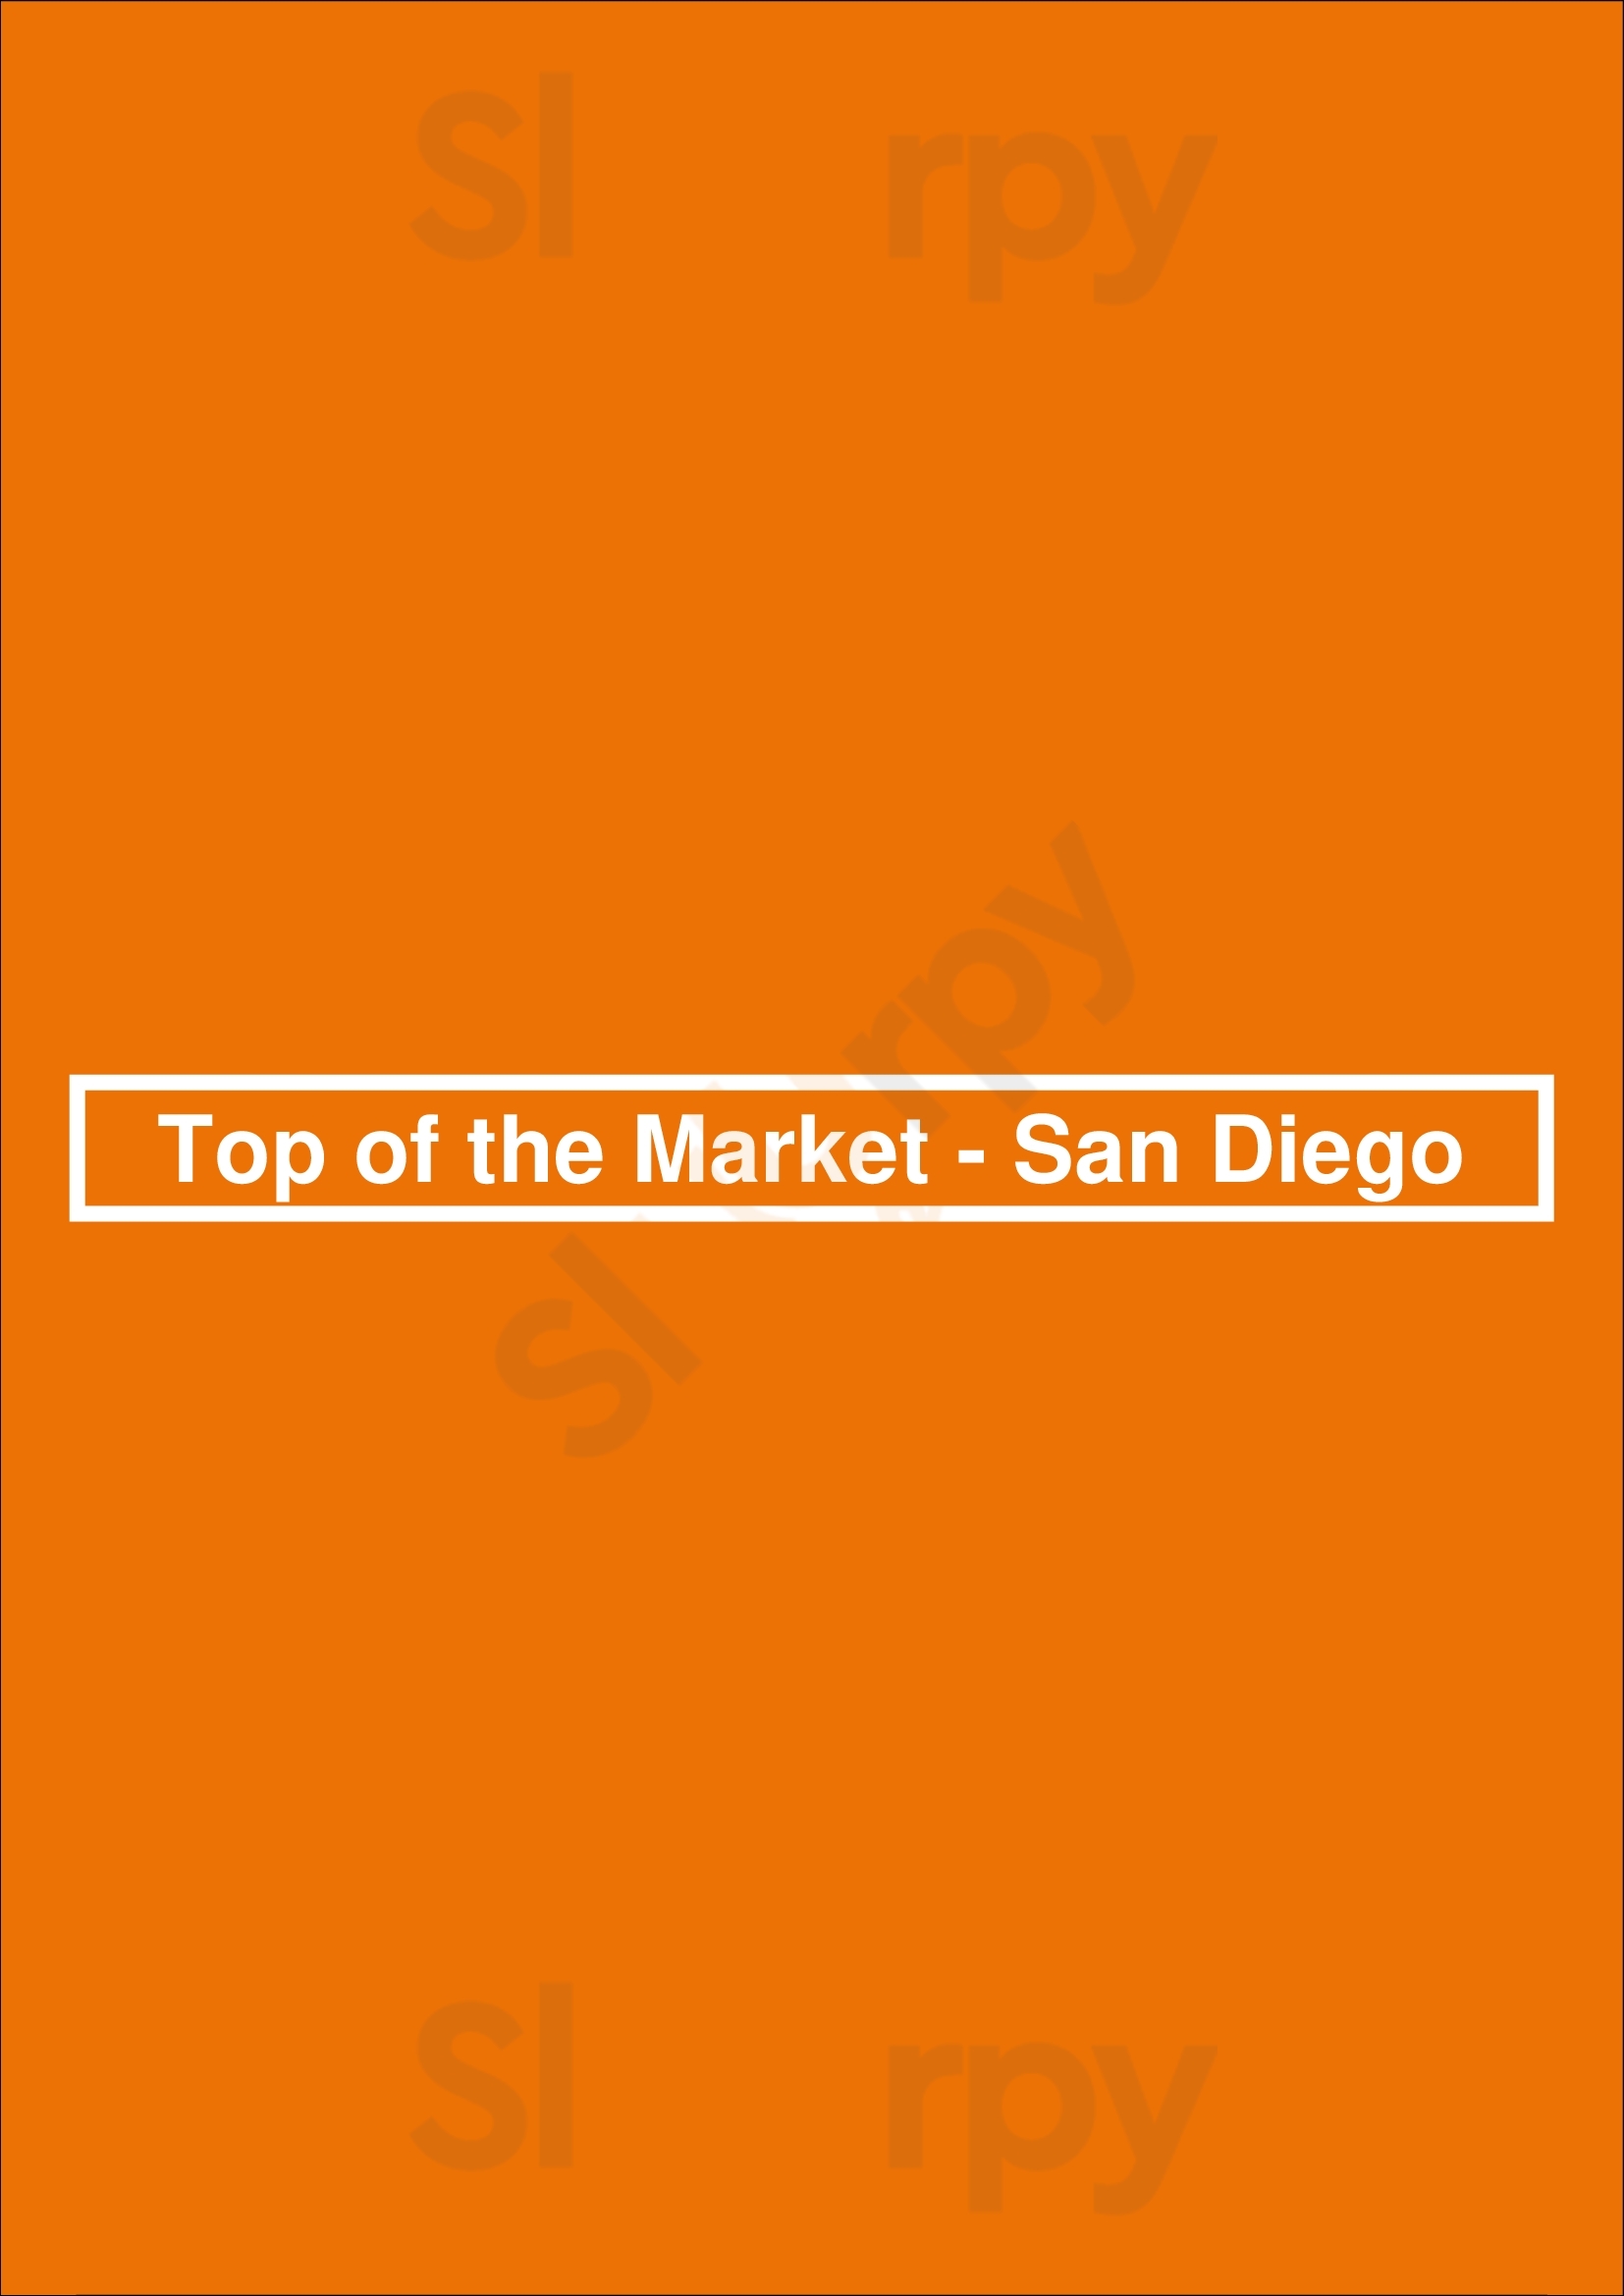 Top Of The Market - San Diego San Diego Menu - 1